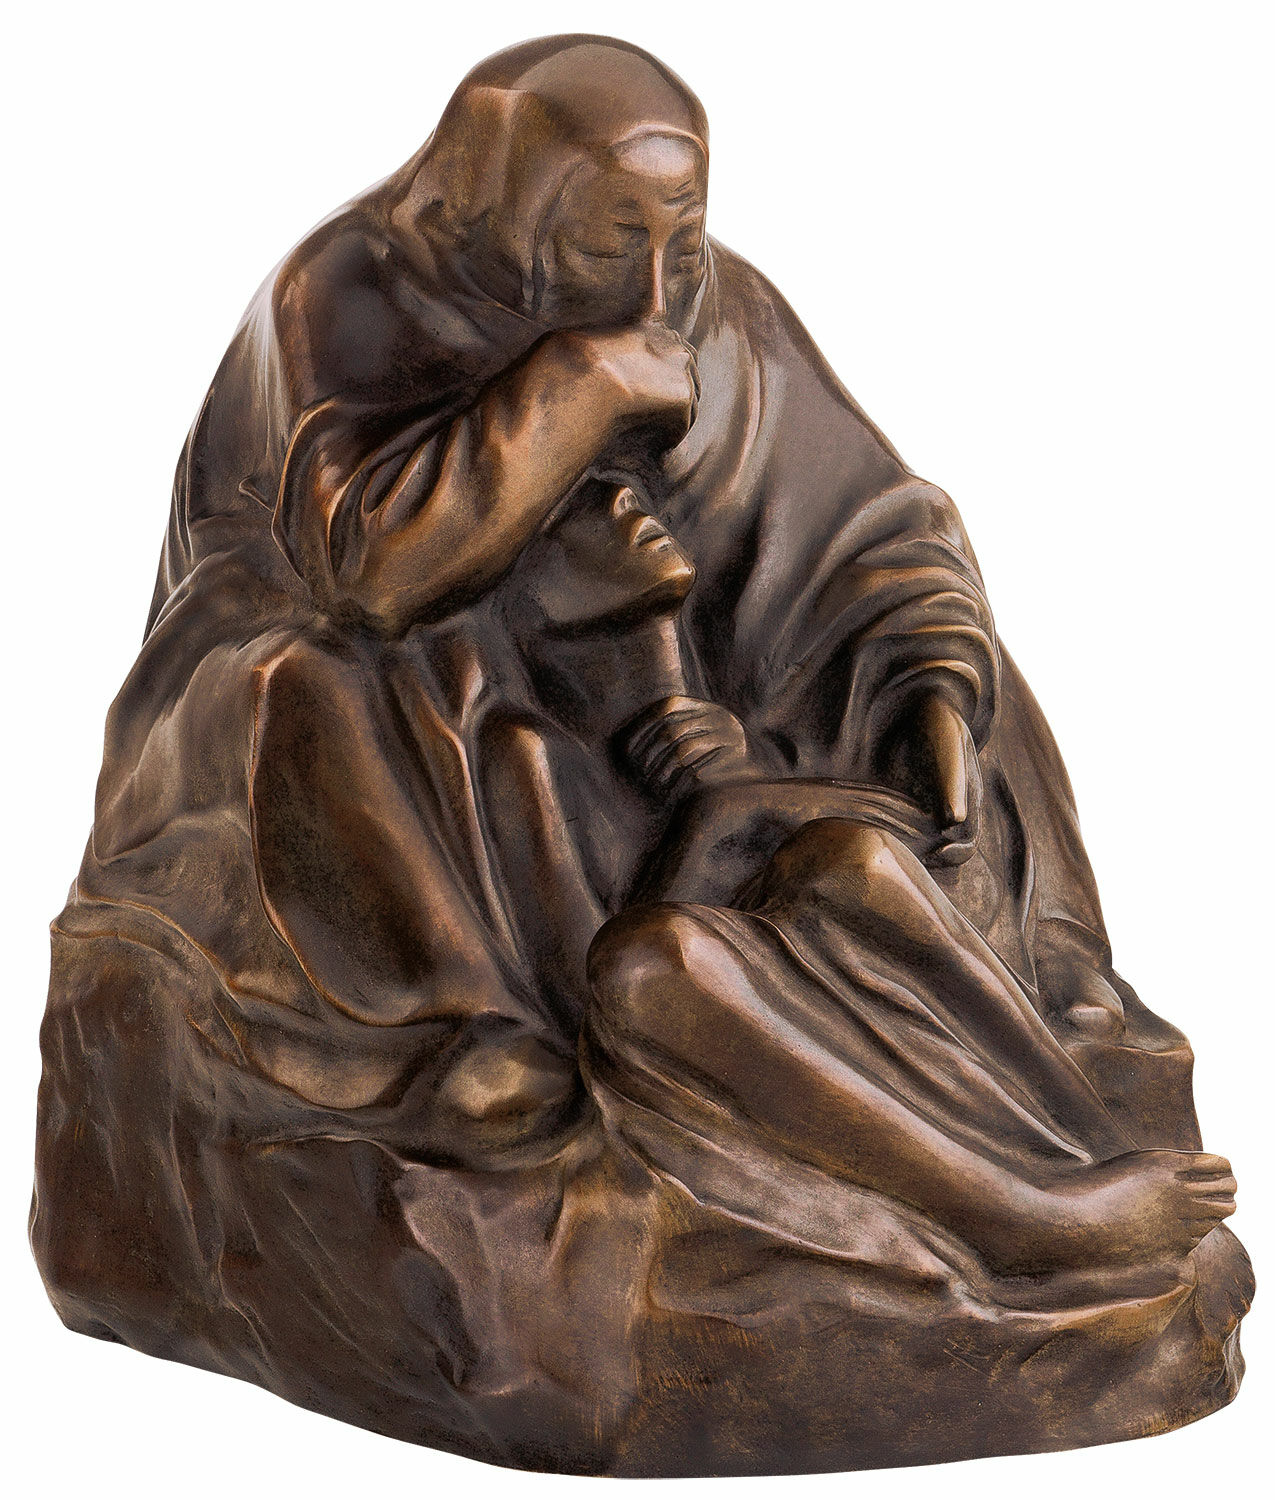 Sculpture "Pietà" (1938/39), reduction in bronze by Käthe Kollwitz